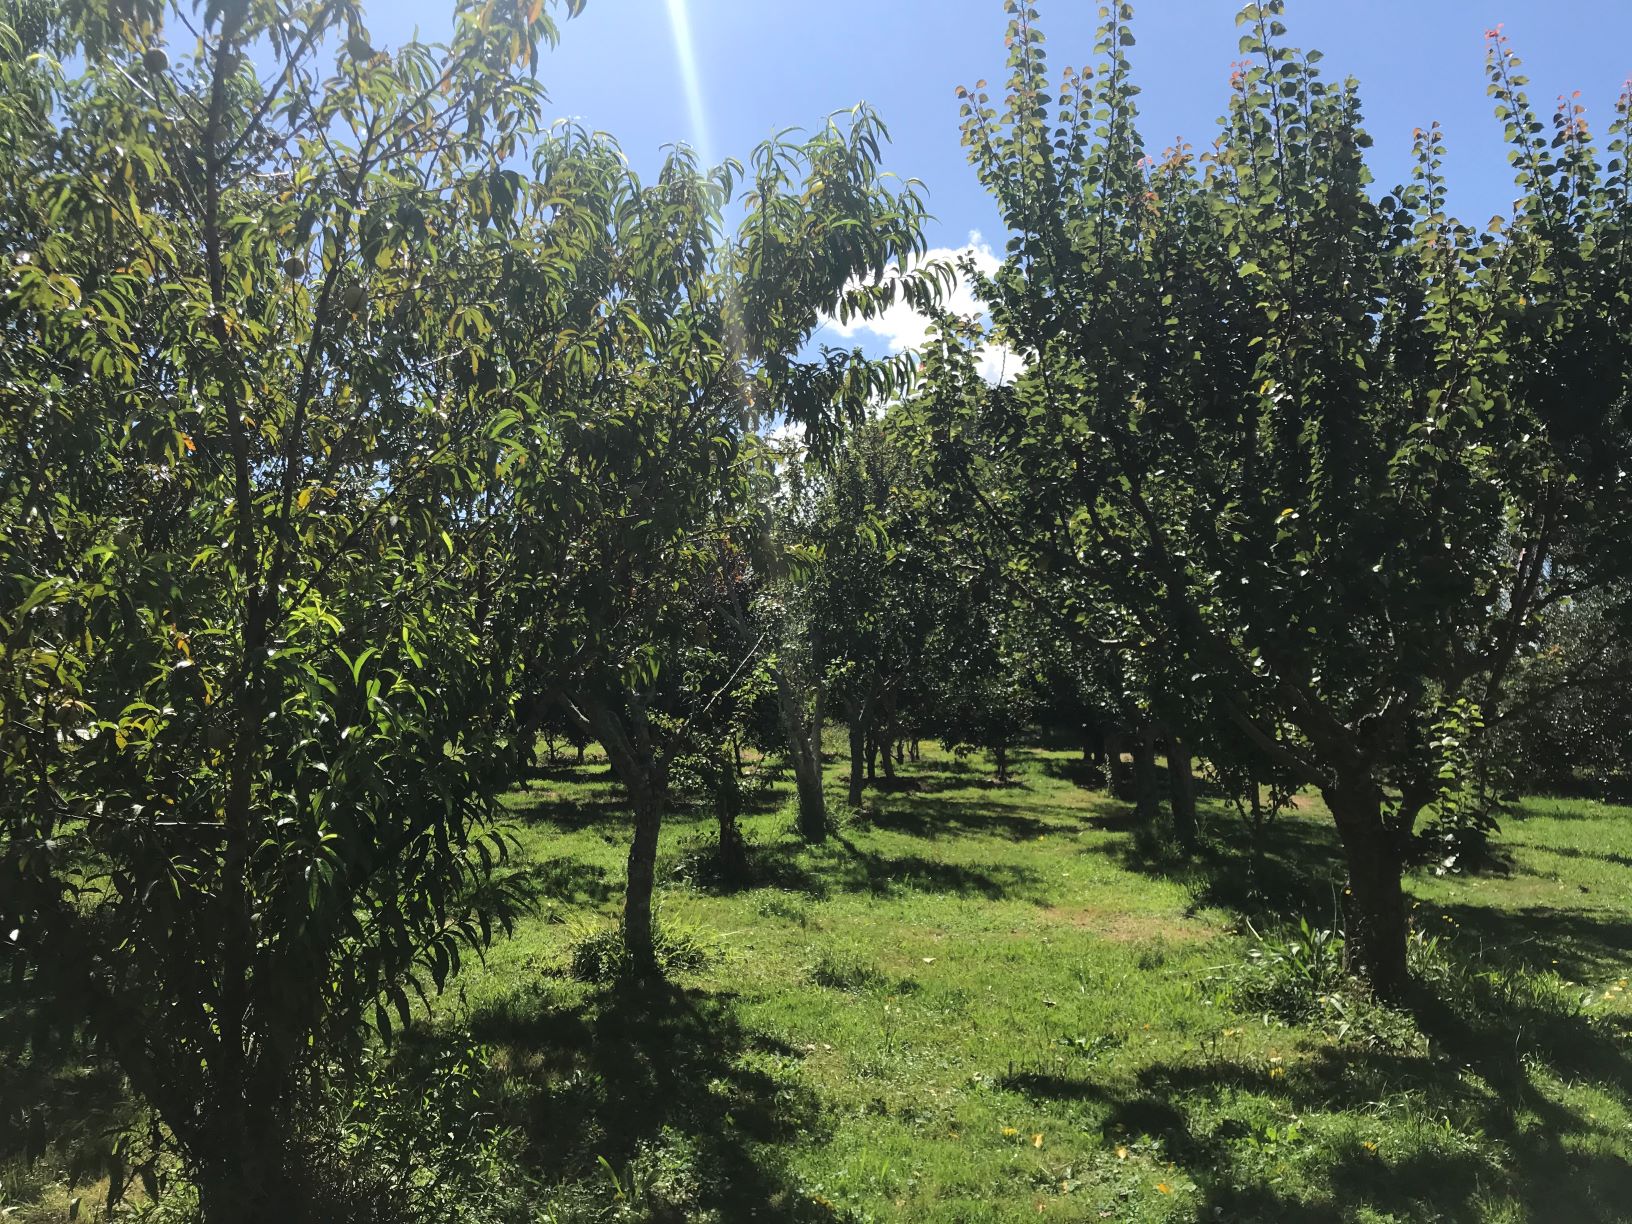 Community orchards